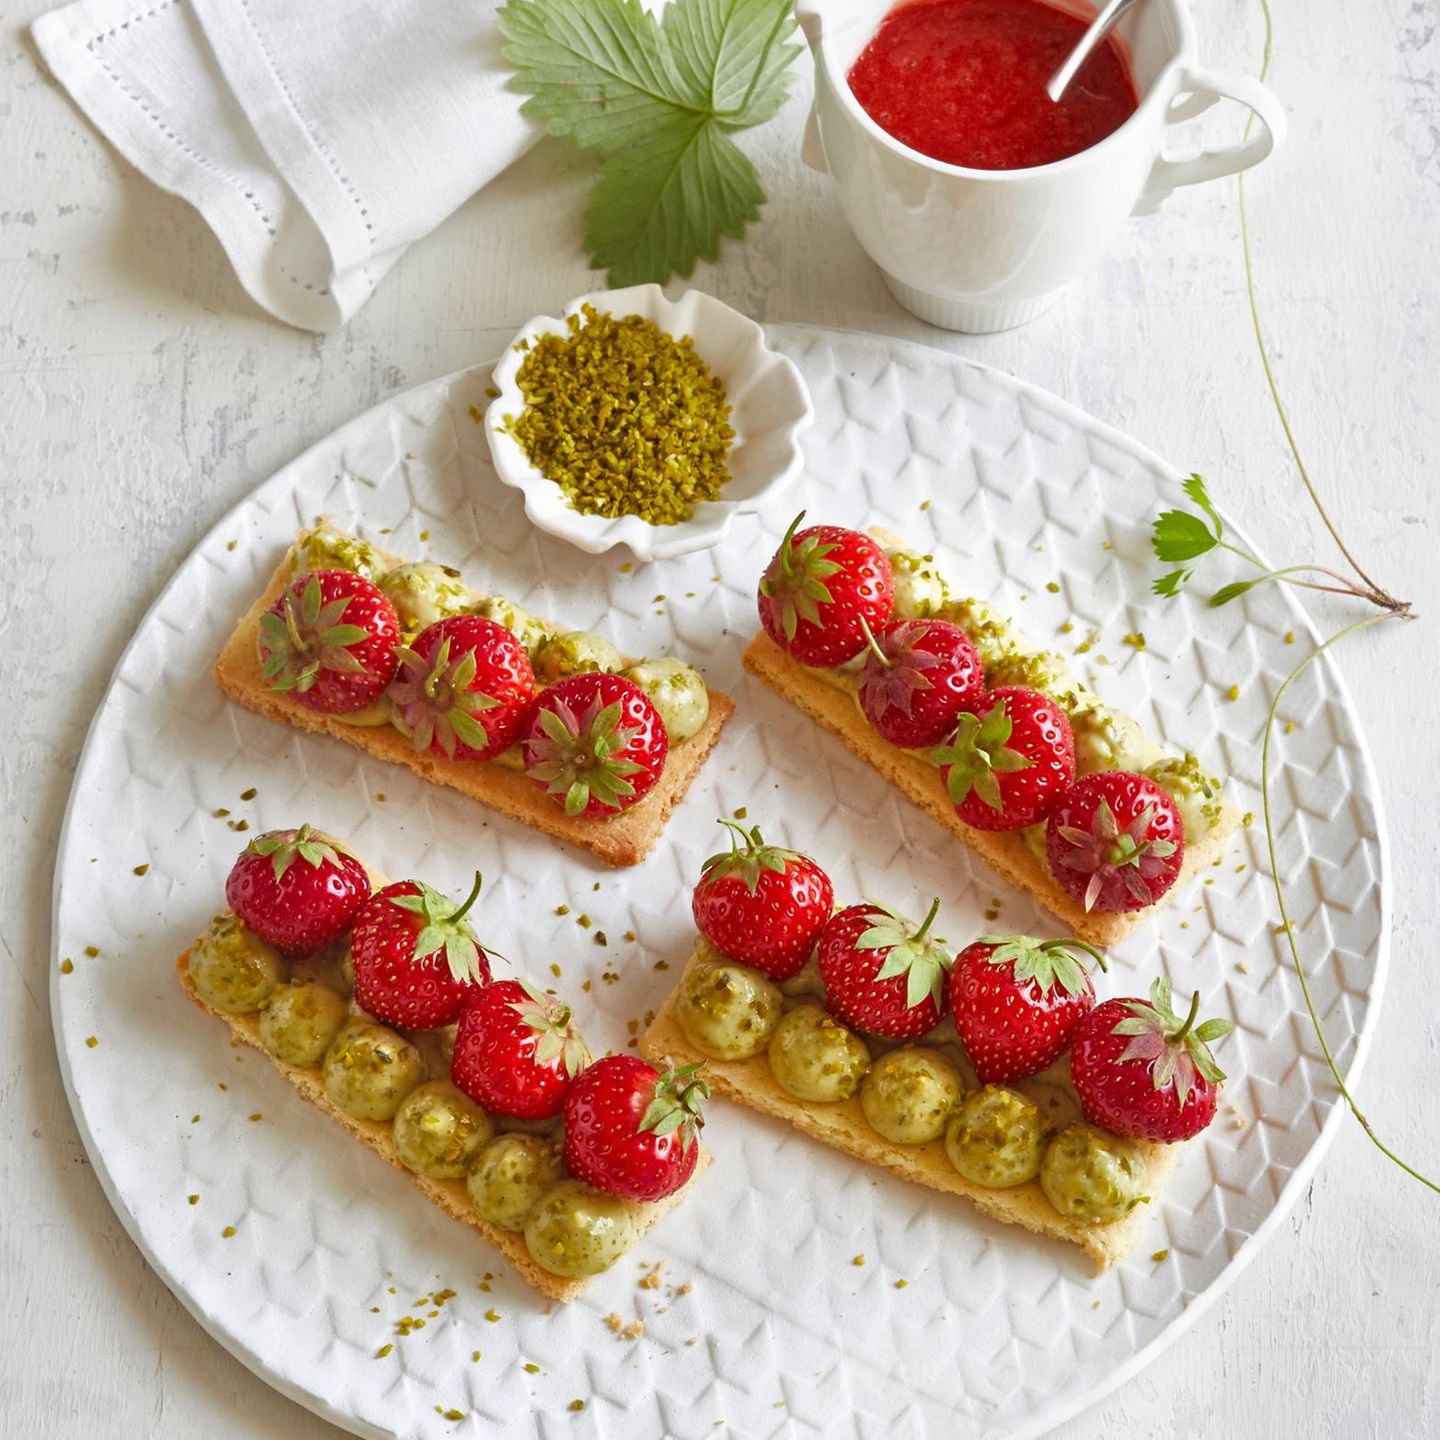 Erdbeer-Sablé-Schnitten mit Pistaziencreme und Erdbeer-Balsamico-Sauce